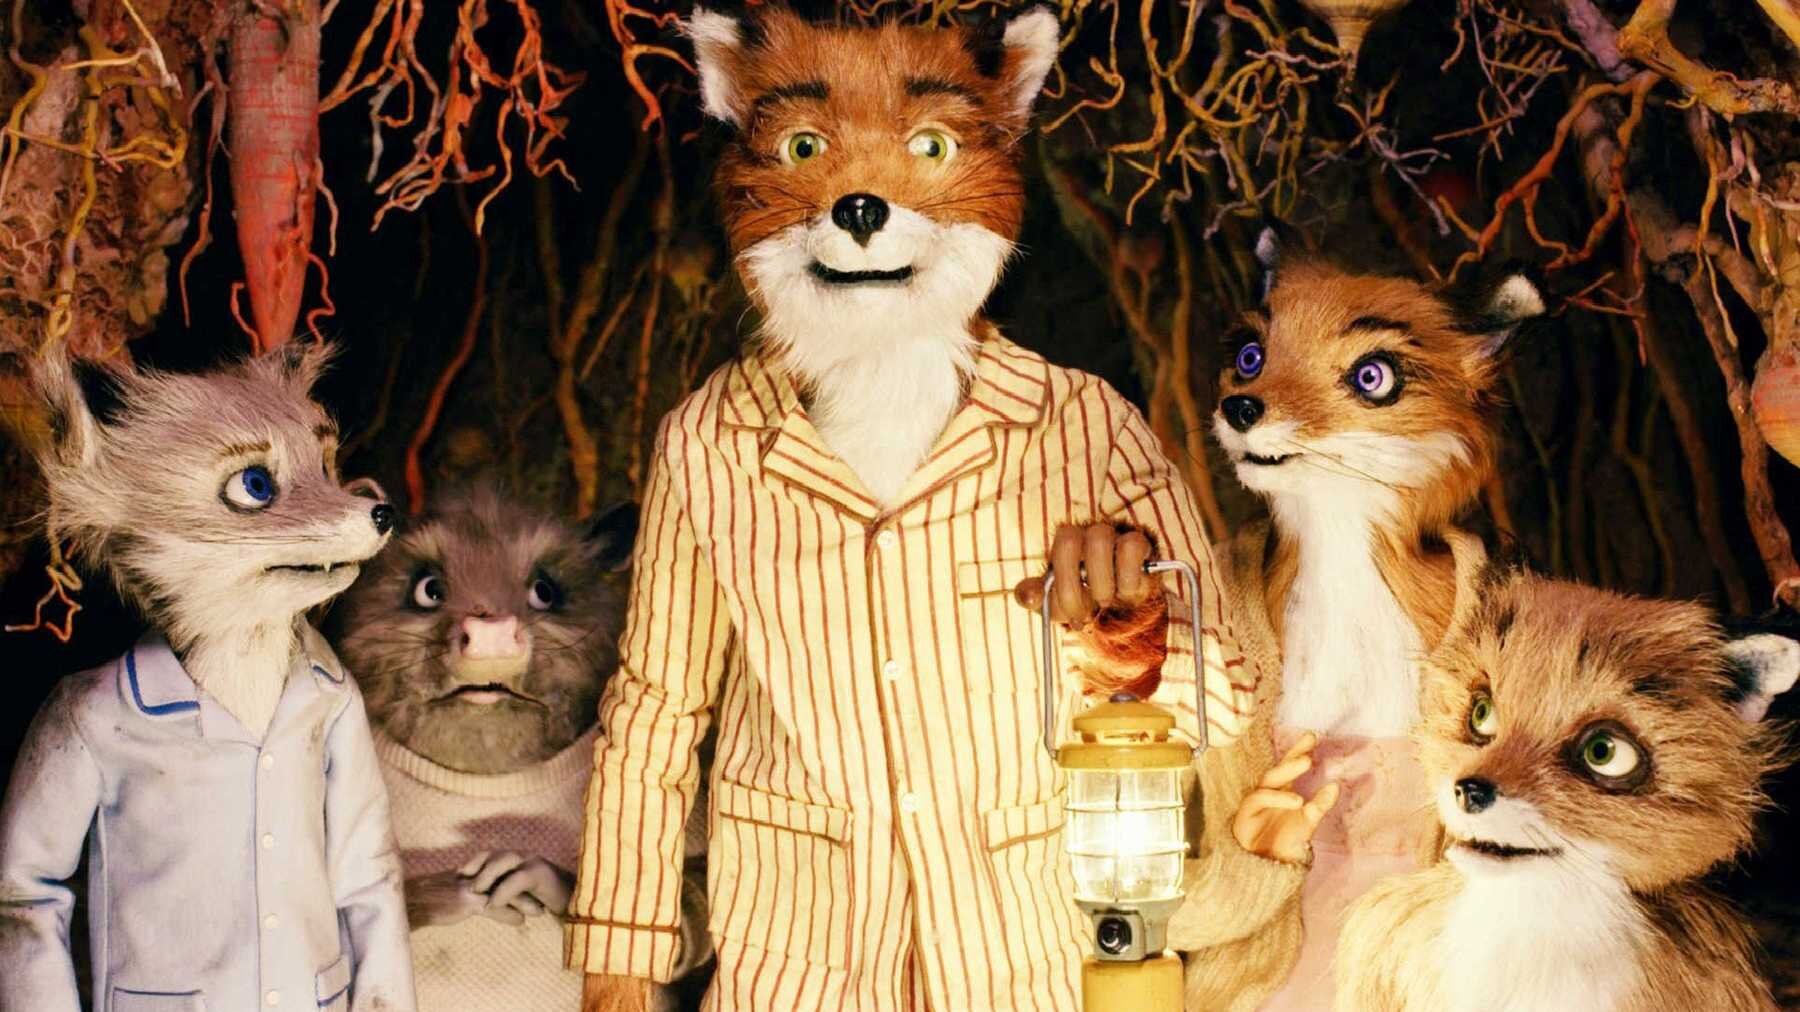 Fantastic Mr.Fox